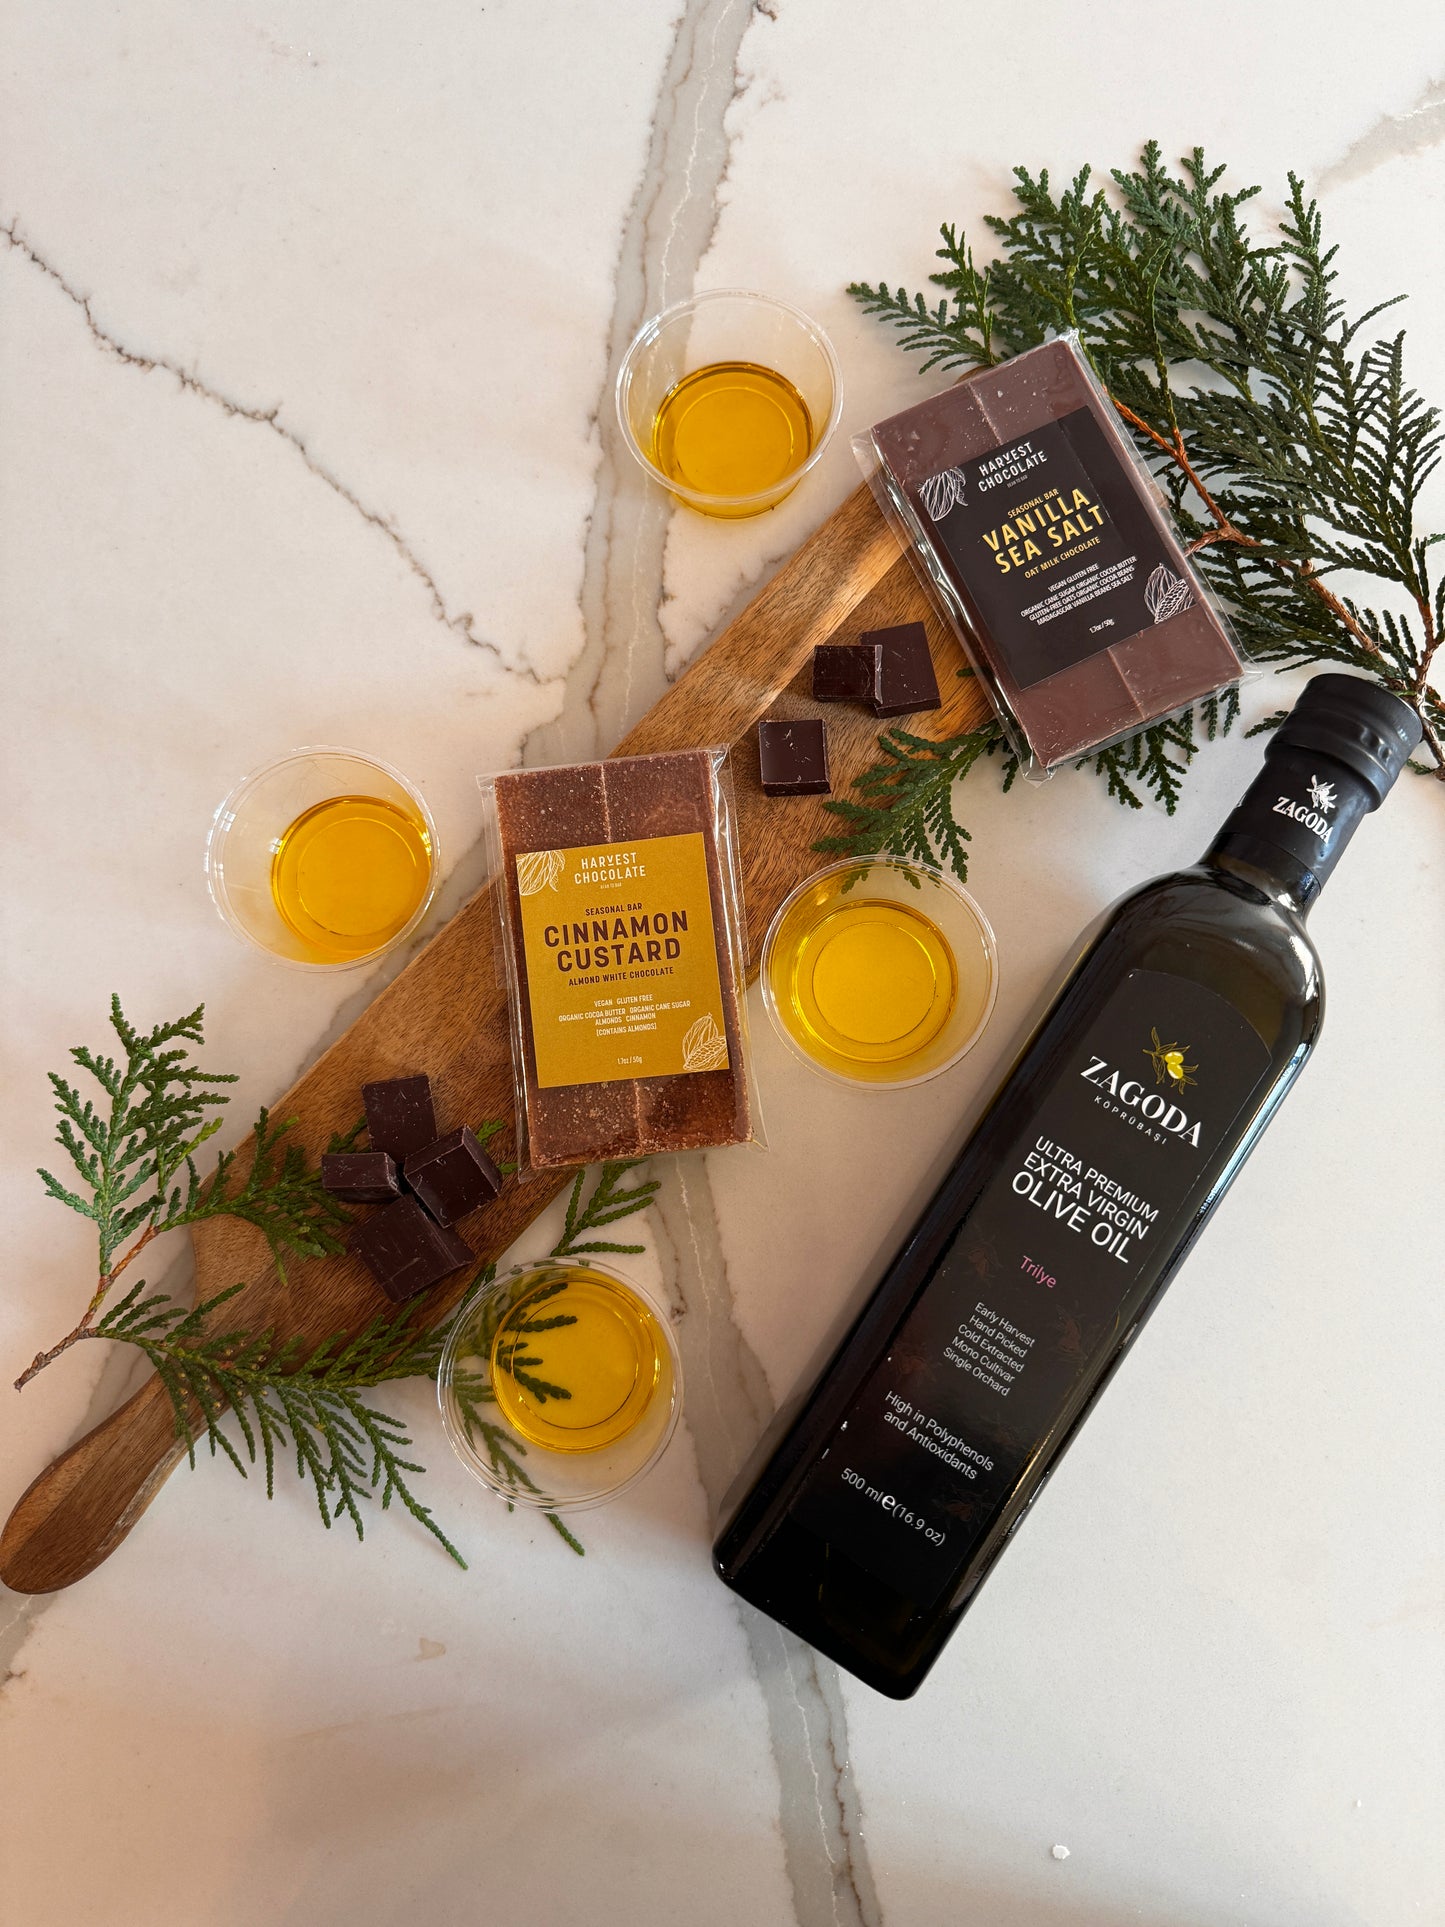 Chocolate + Olive Oil Tasting: February 10th